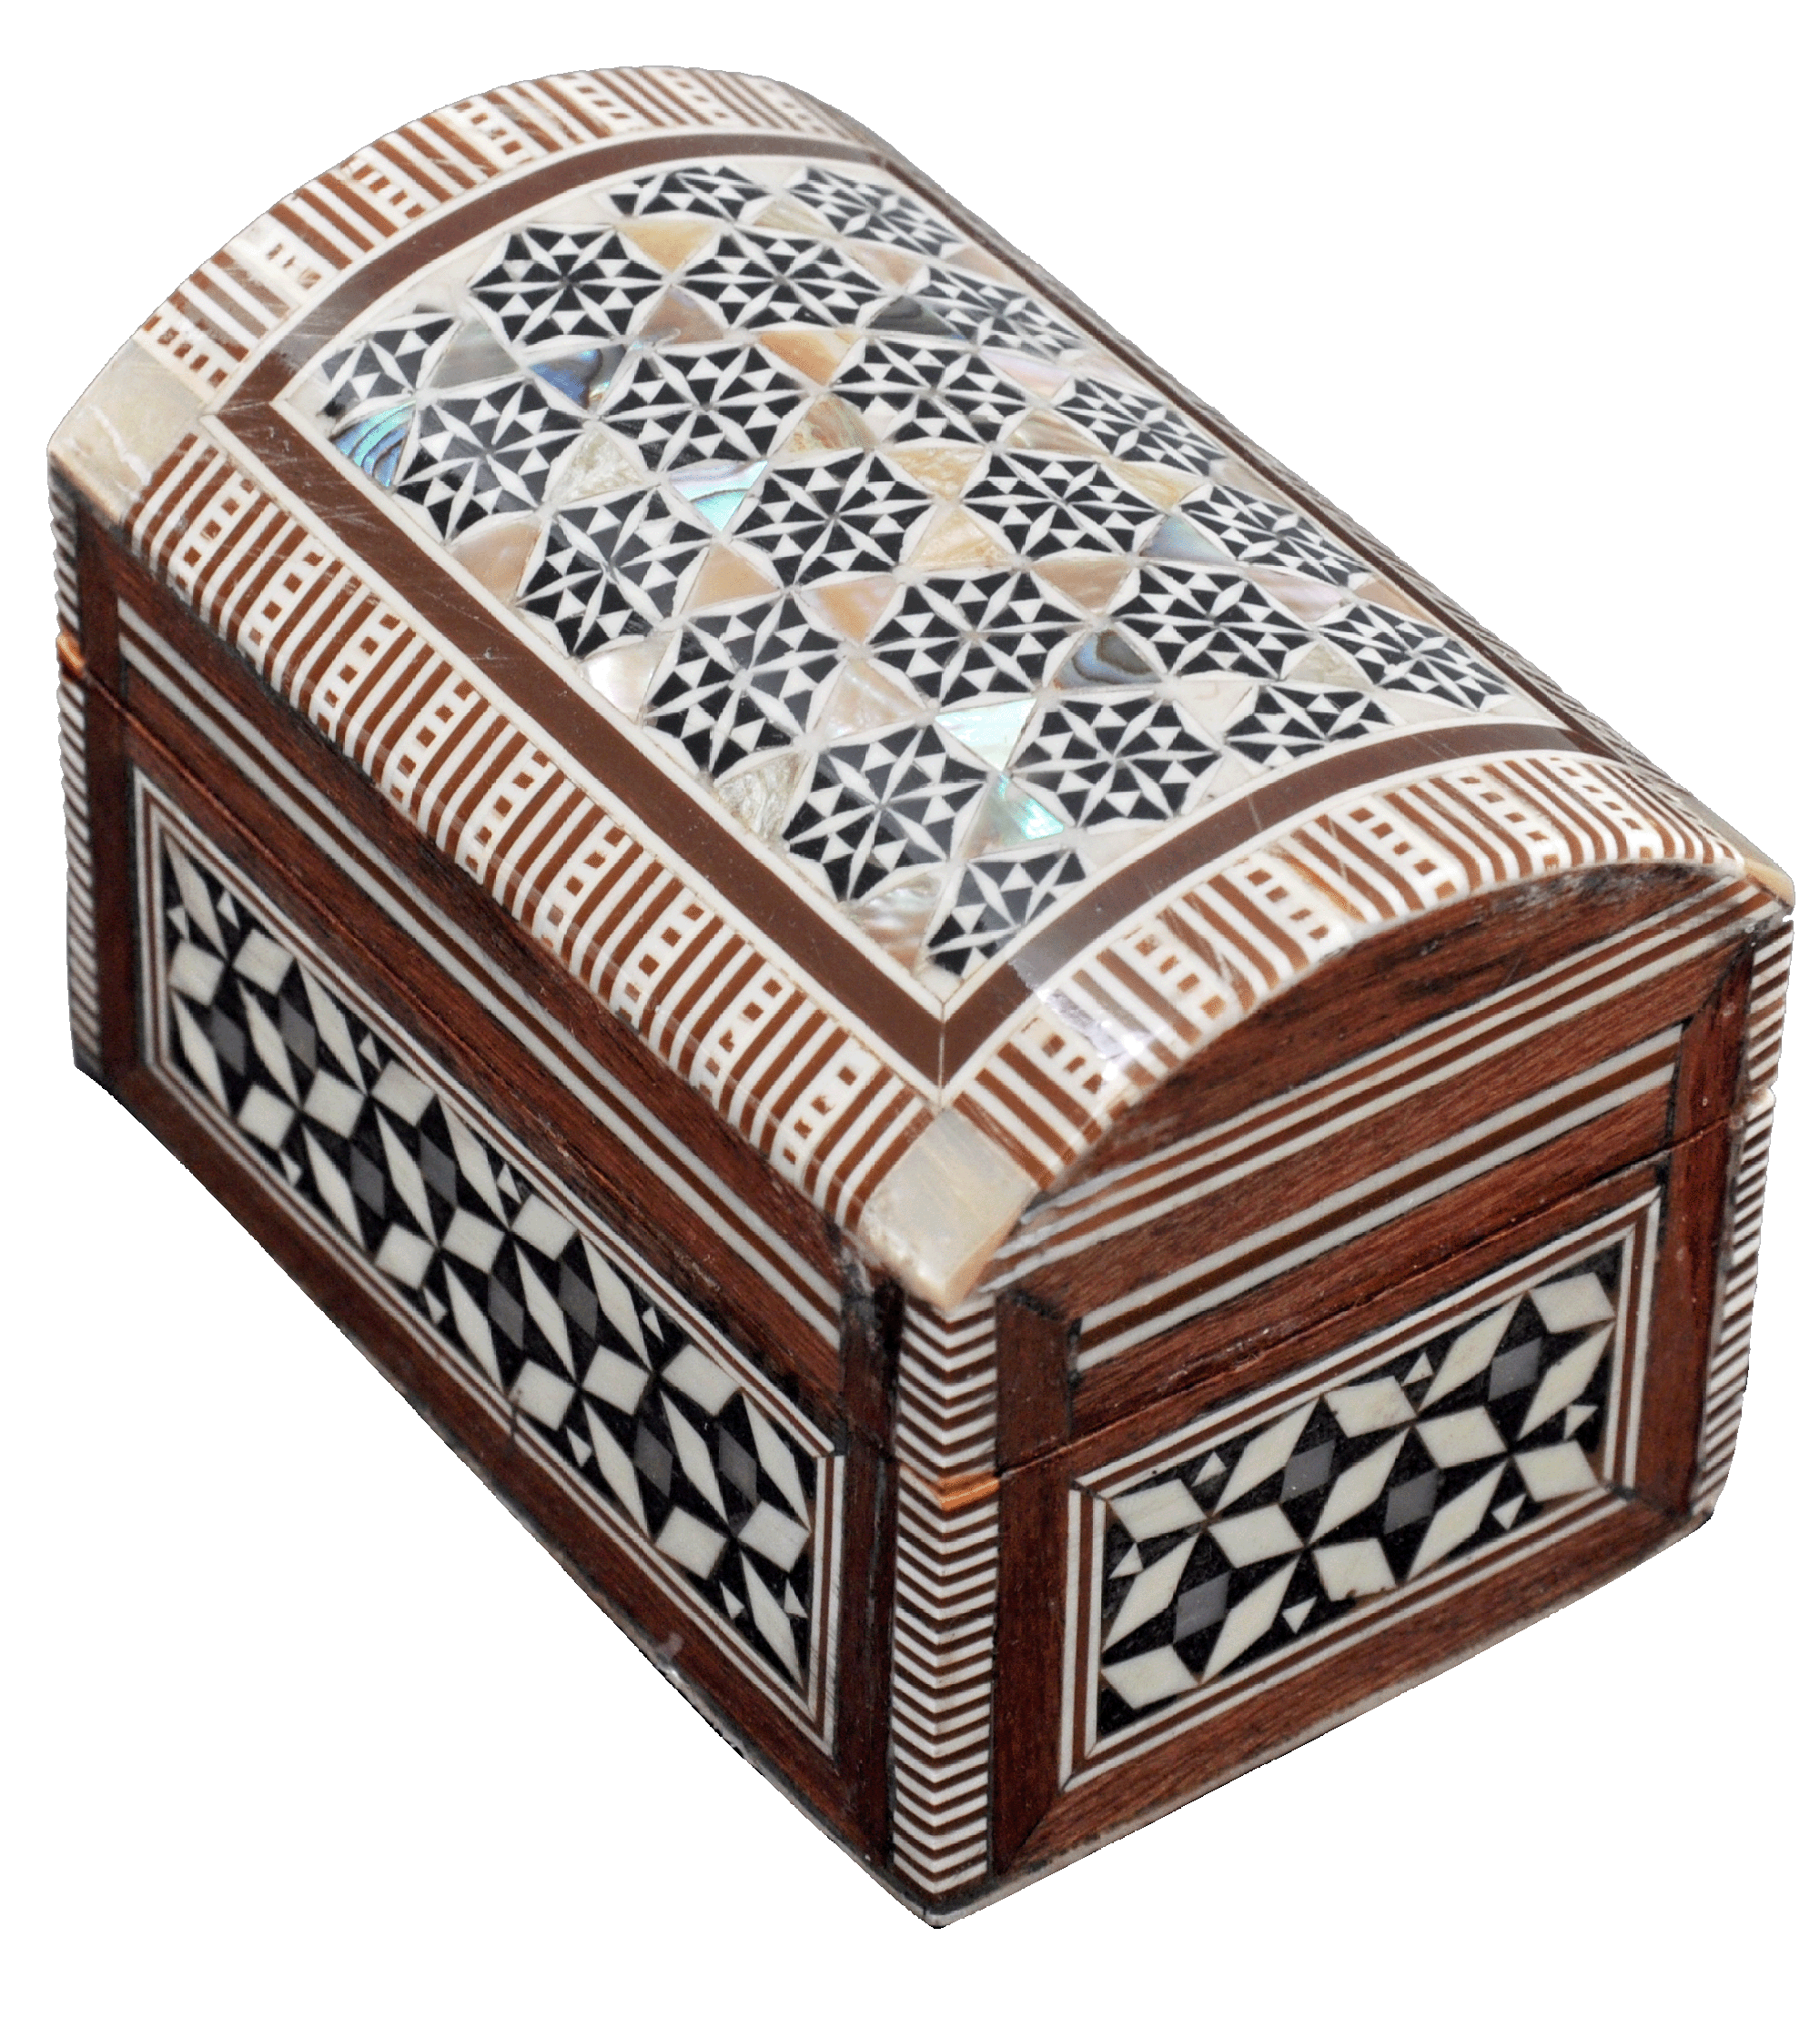 Egyptian Mother of Pearl Inlaid Paua Hexagonal Jewelry Box #138 